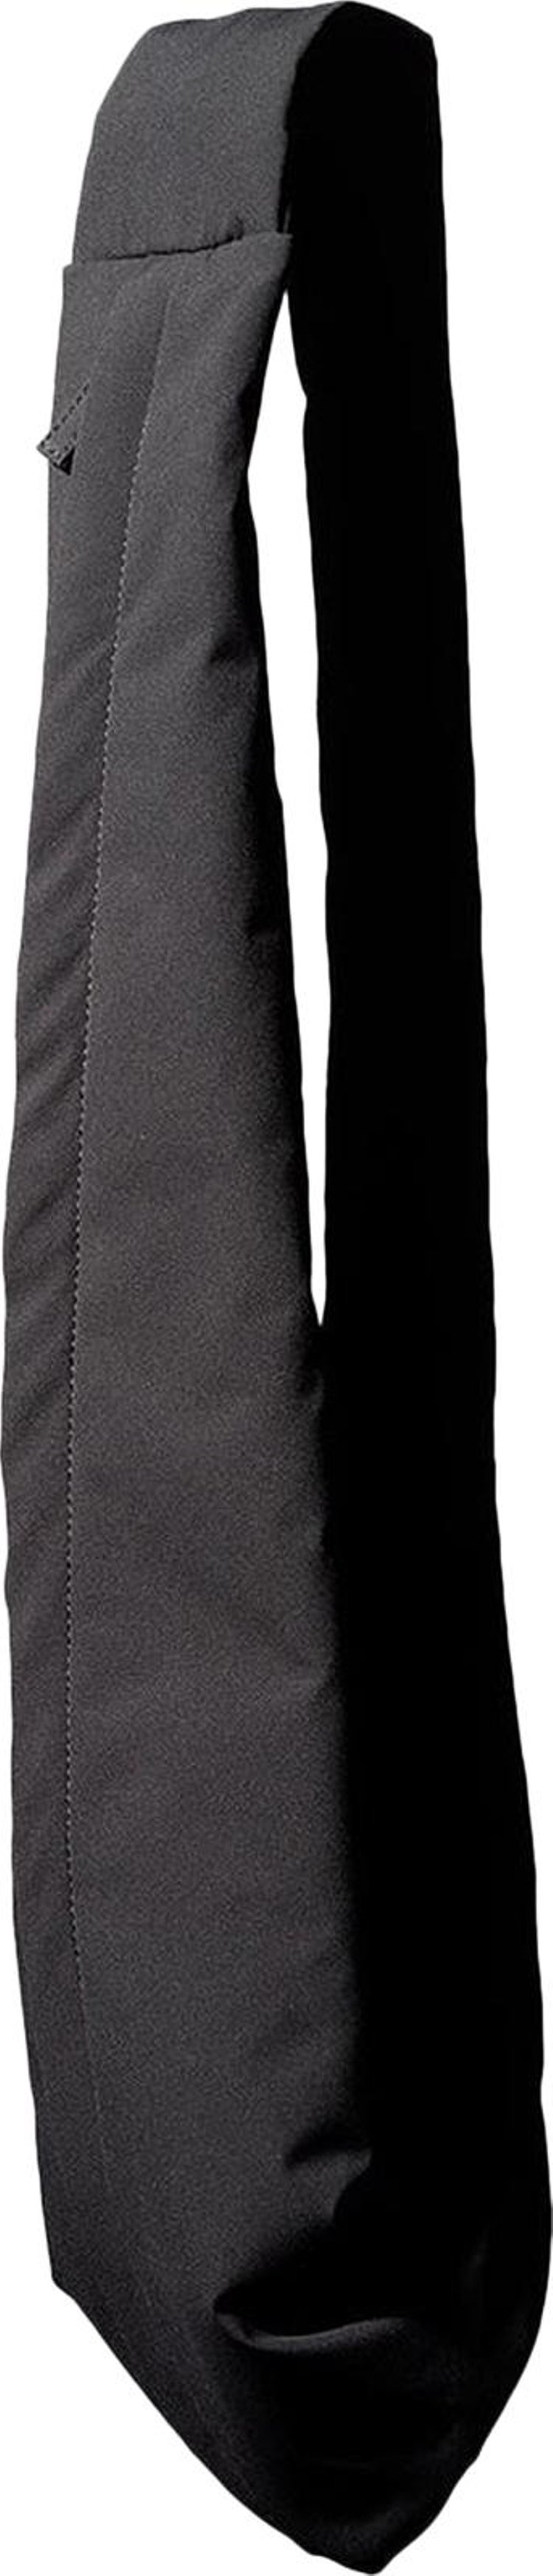 Сумка Yeezy Gap Engineered by Balenciaga Snake Bag Black, черный сумка balenciaga